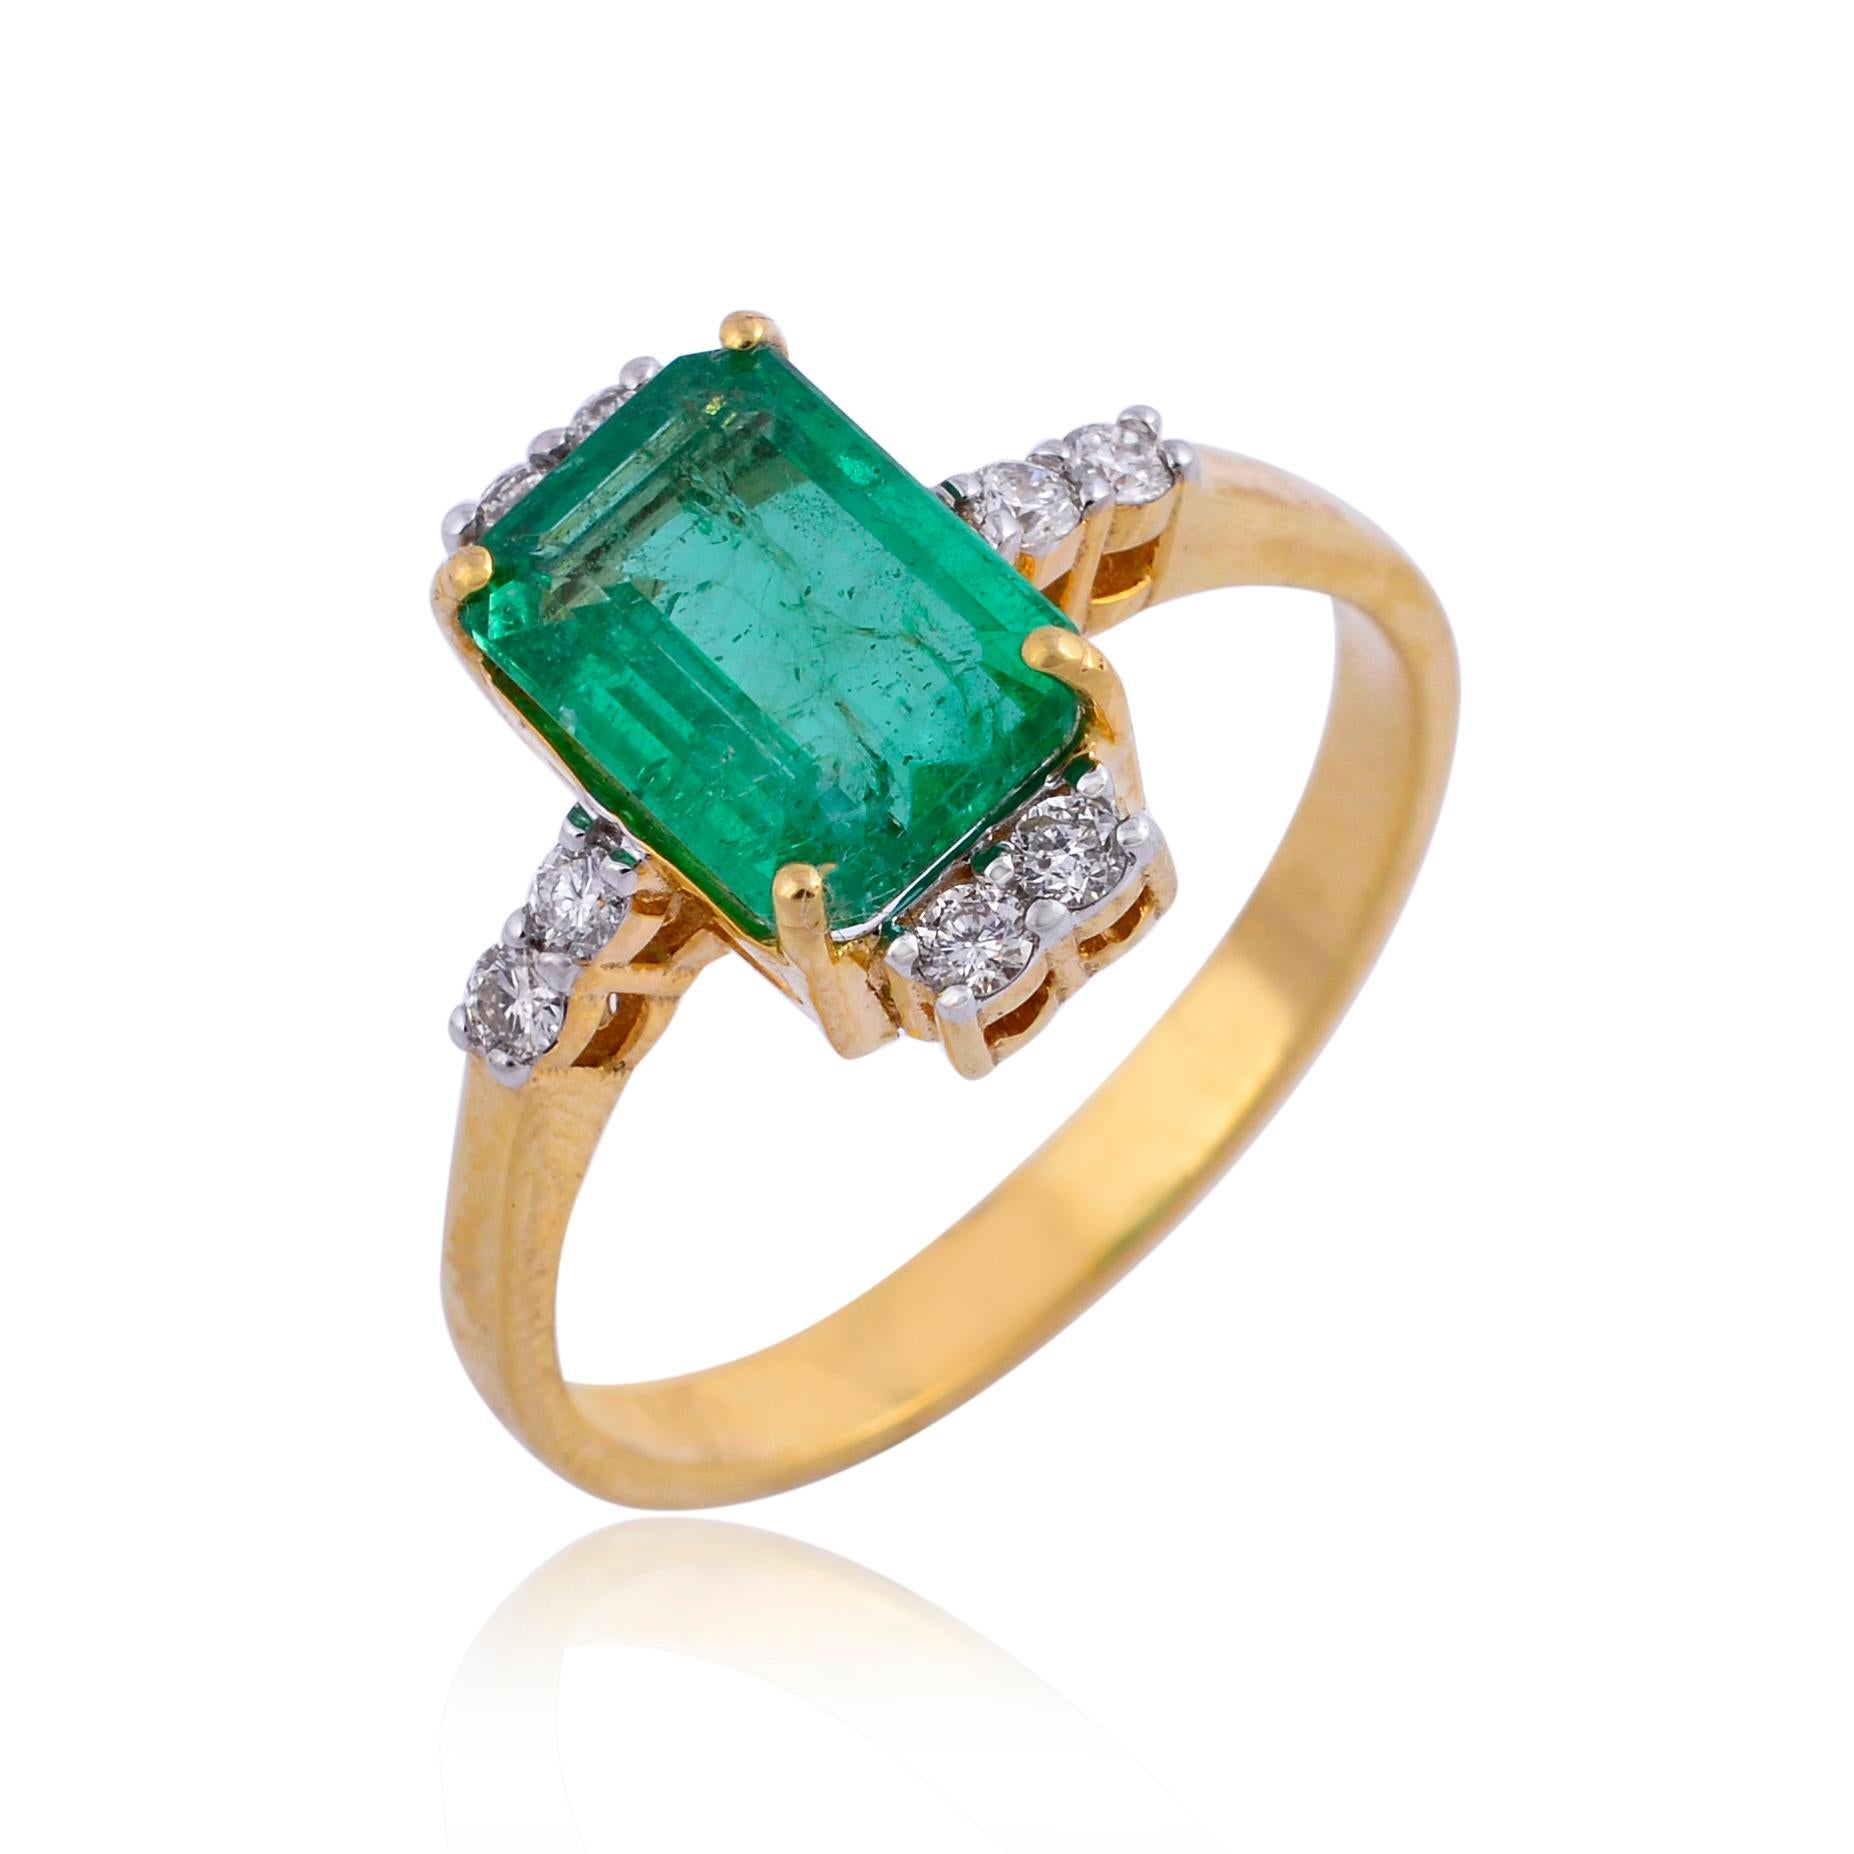 For Sale:  Natural Emerald Gemstone Wedding Ring Diamond 18k Yellow Gold Handmade Jewelry 2